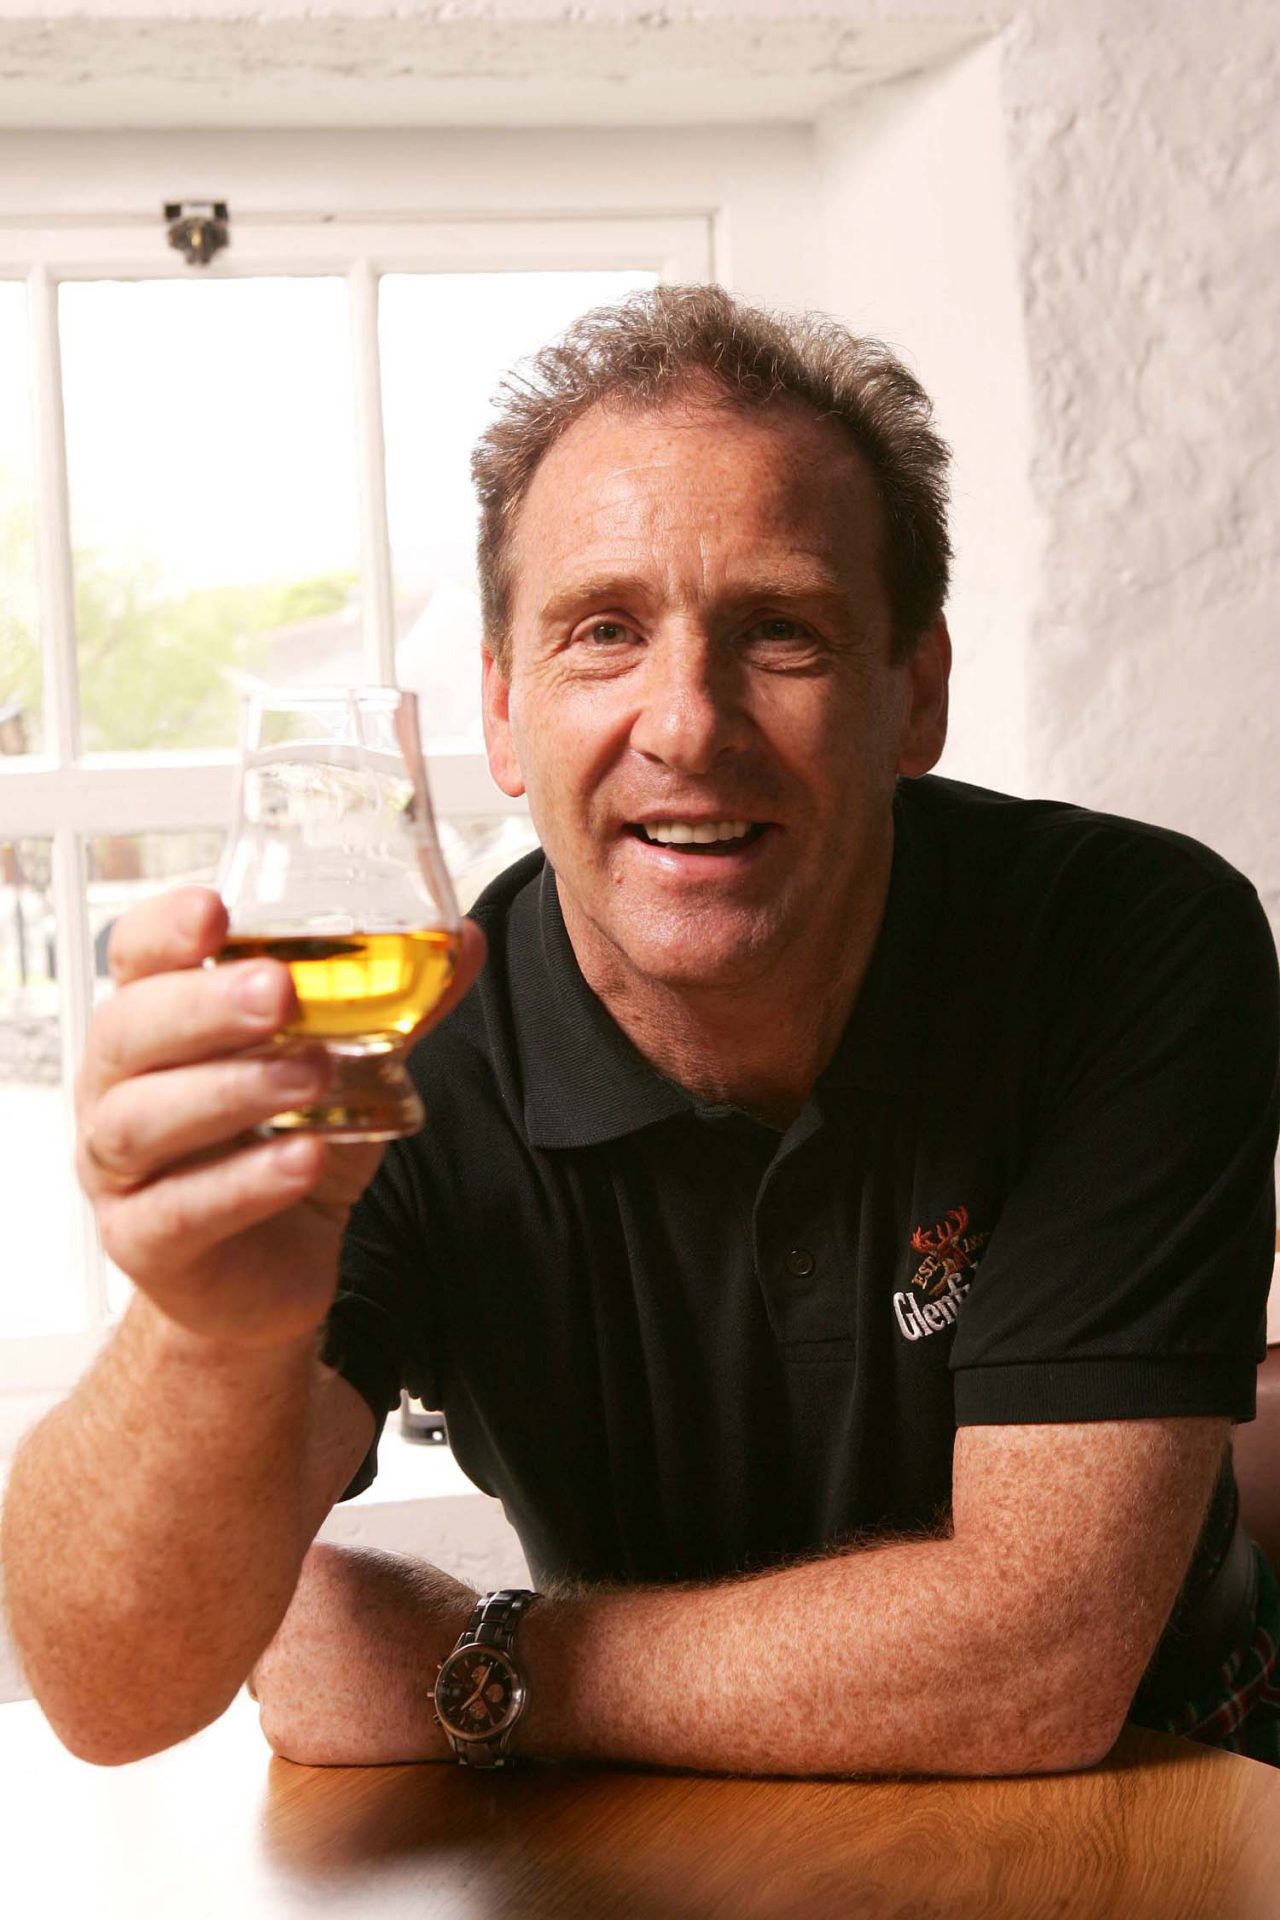 How to taste malt whisky with Glenfiddich Master Distiller Ian Millar